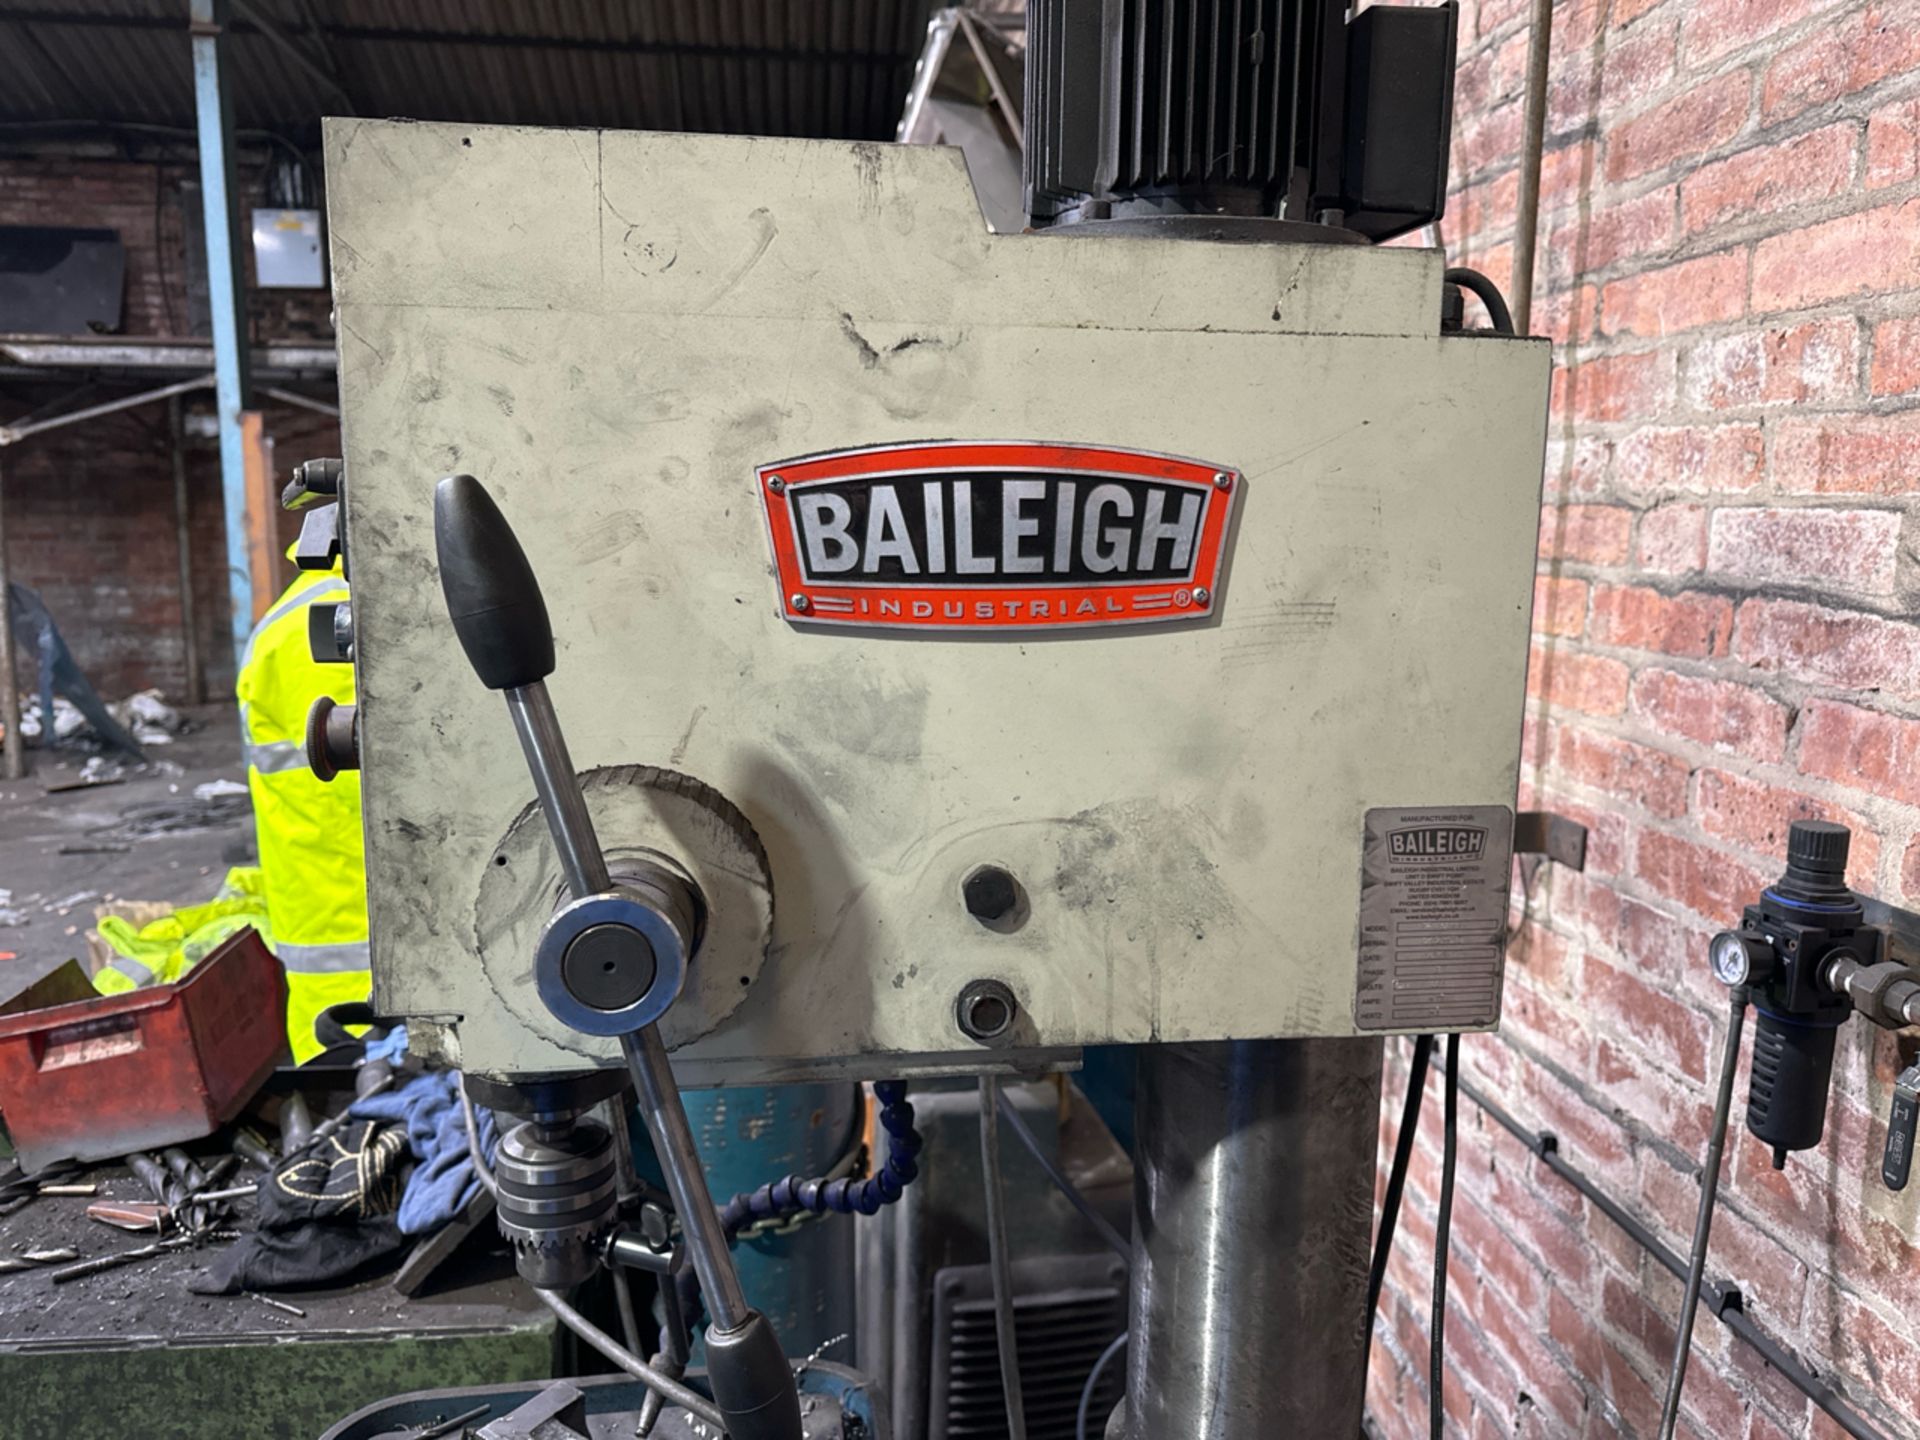 Baileigh Drill Press - Gear Driven DP-1500G - Image 7 of 8